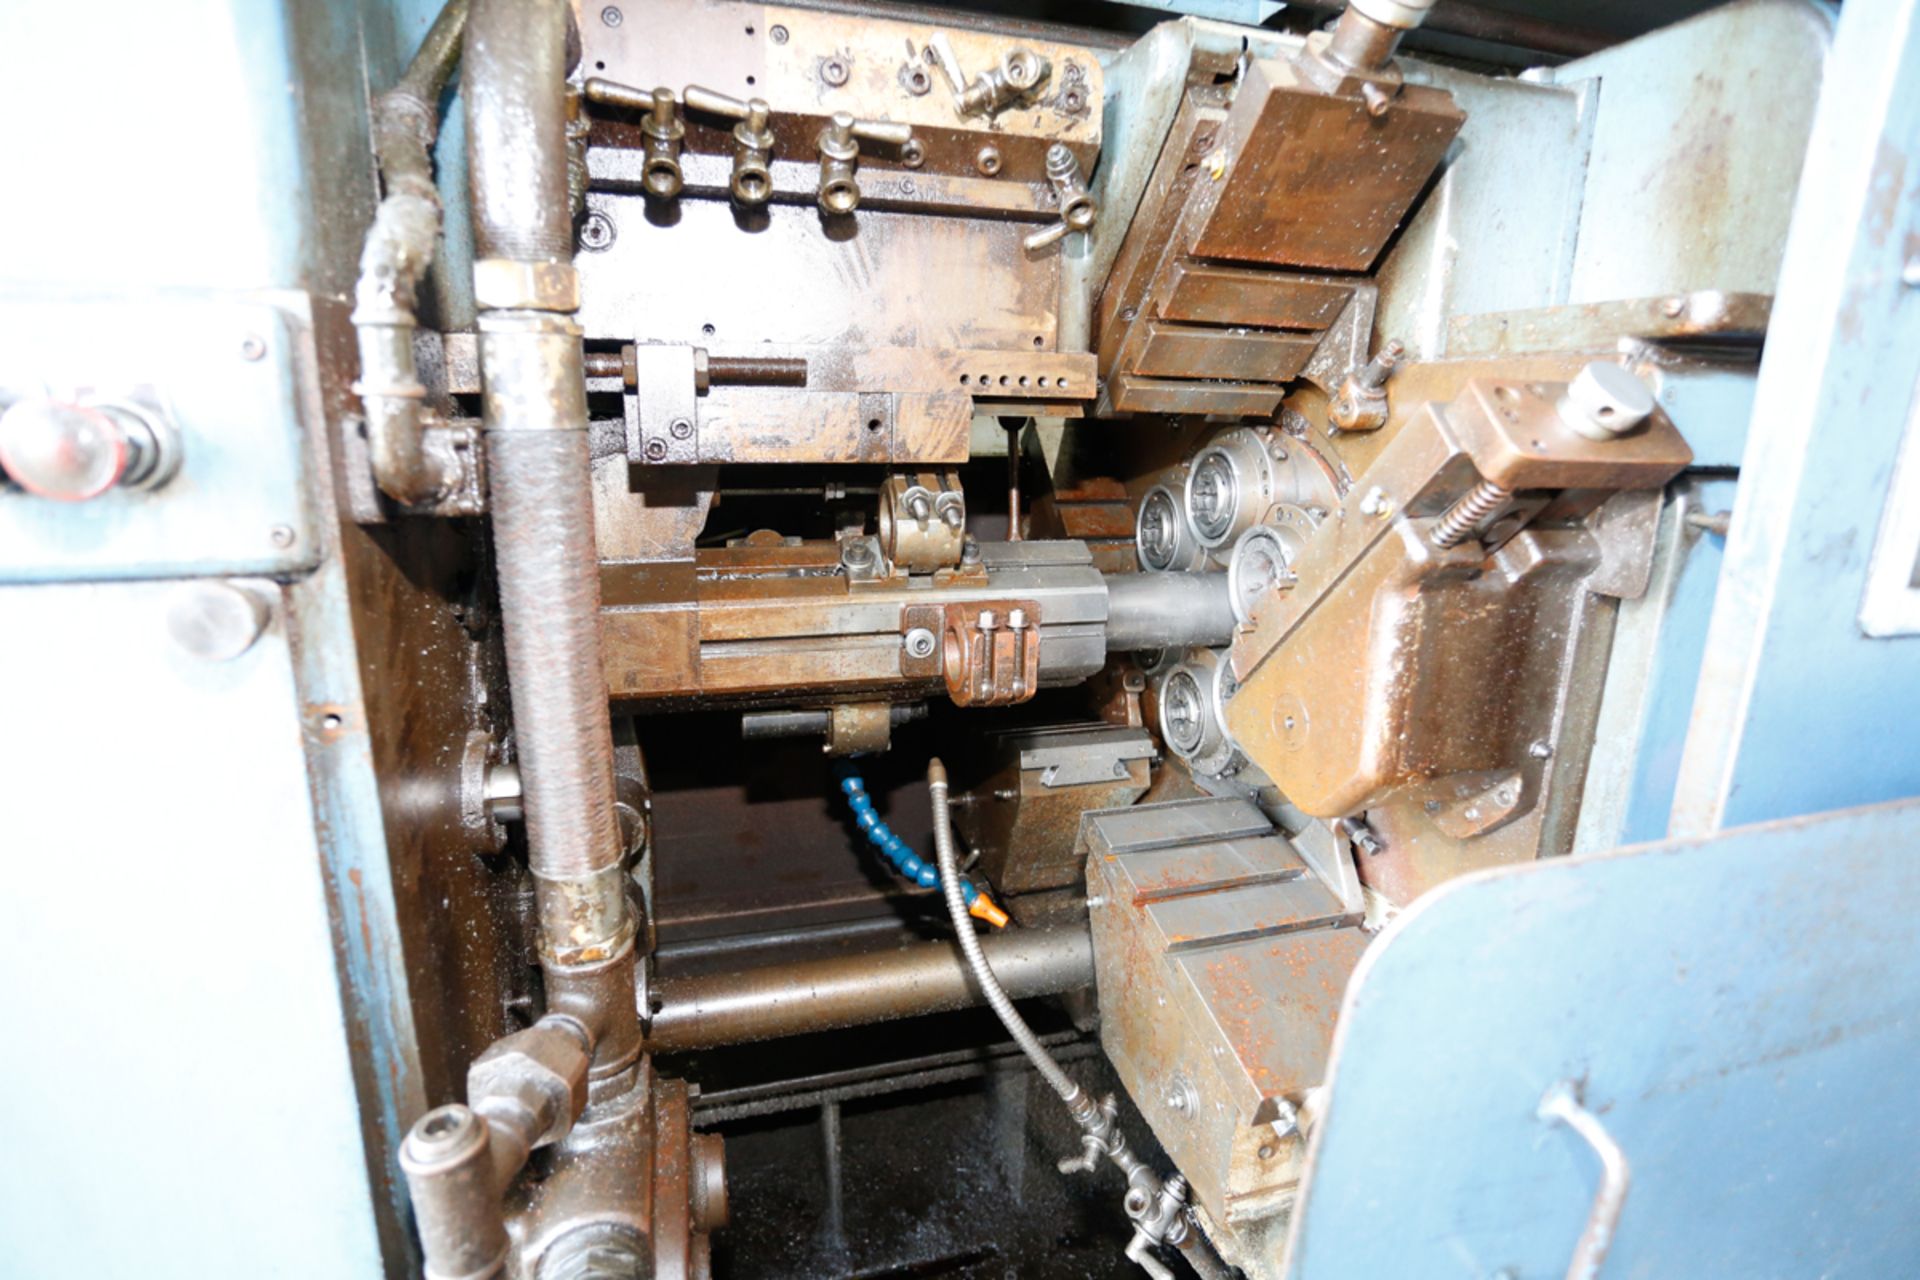 WICKMAN 1"-6 AUTOMATIC SCREW MACHINE, S/N: 650194 - LOCATED IN RICHMOND, QC - Image 2 of 3